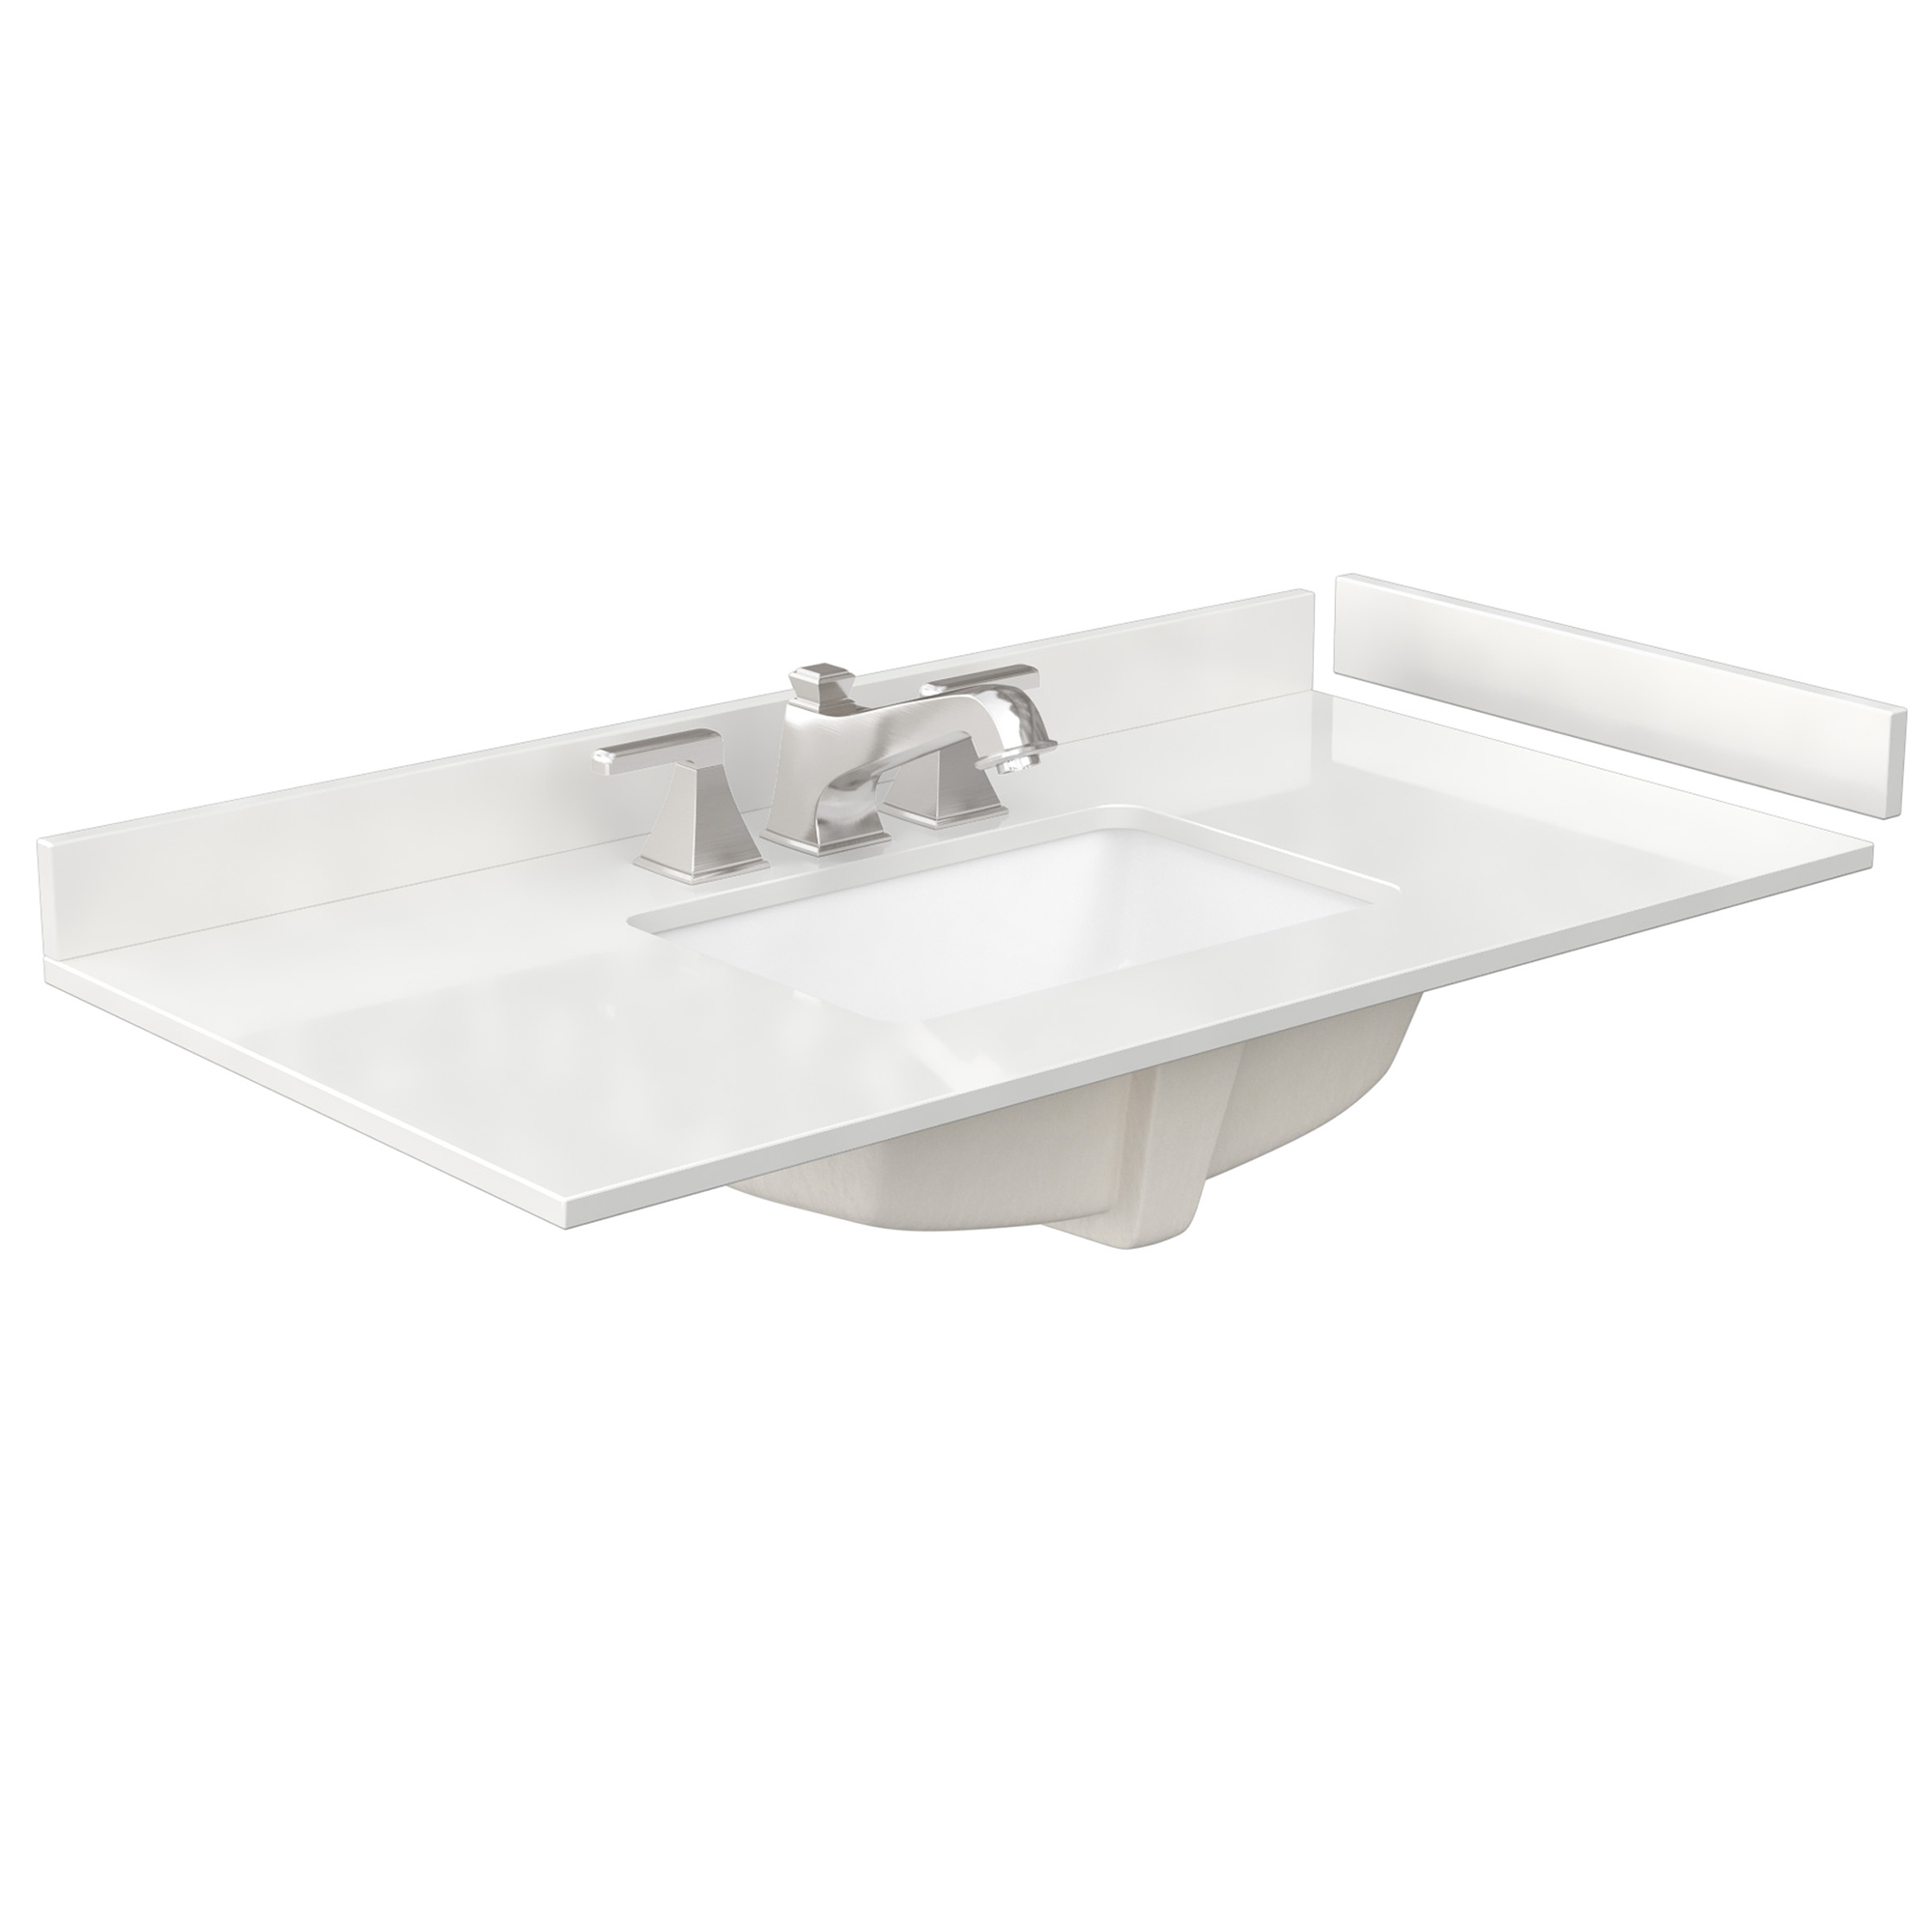 beckett 42" single bathroom vanity with toe kick, quartz counter - white